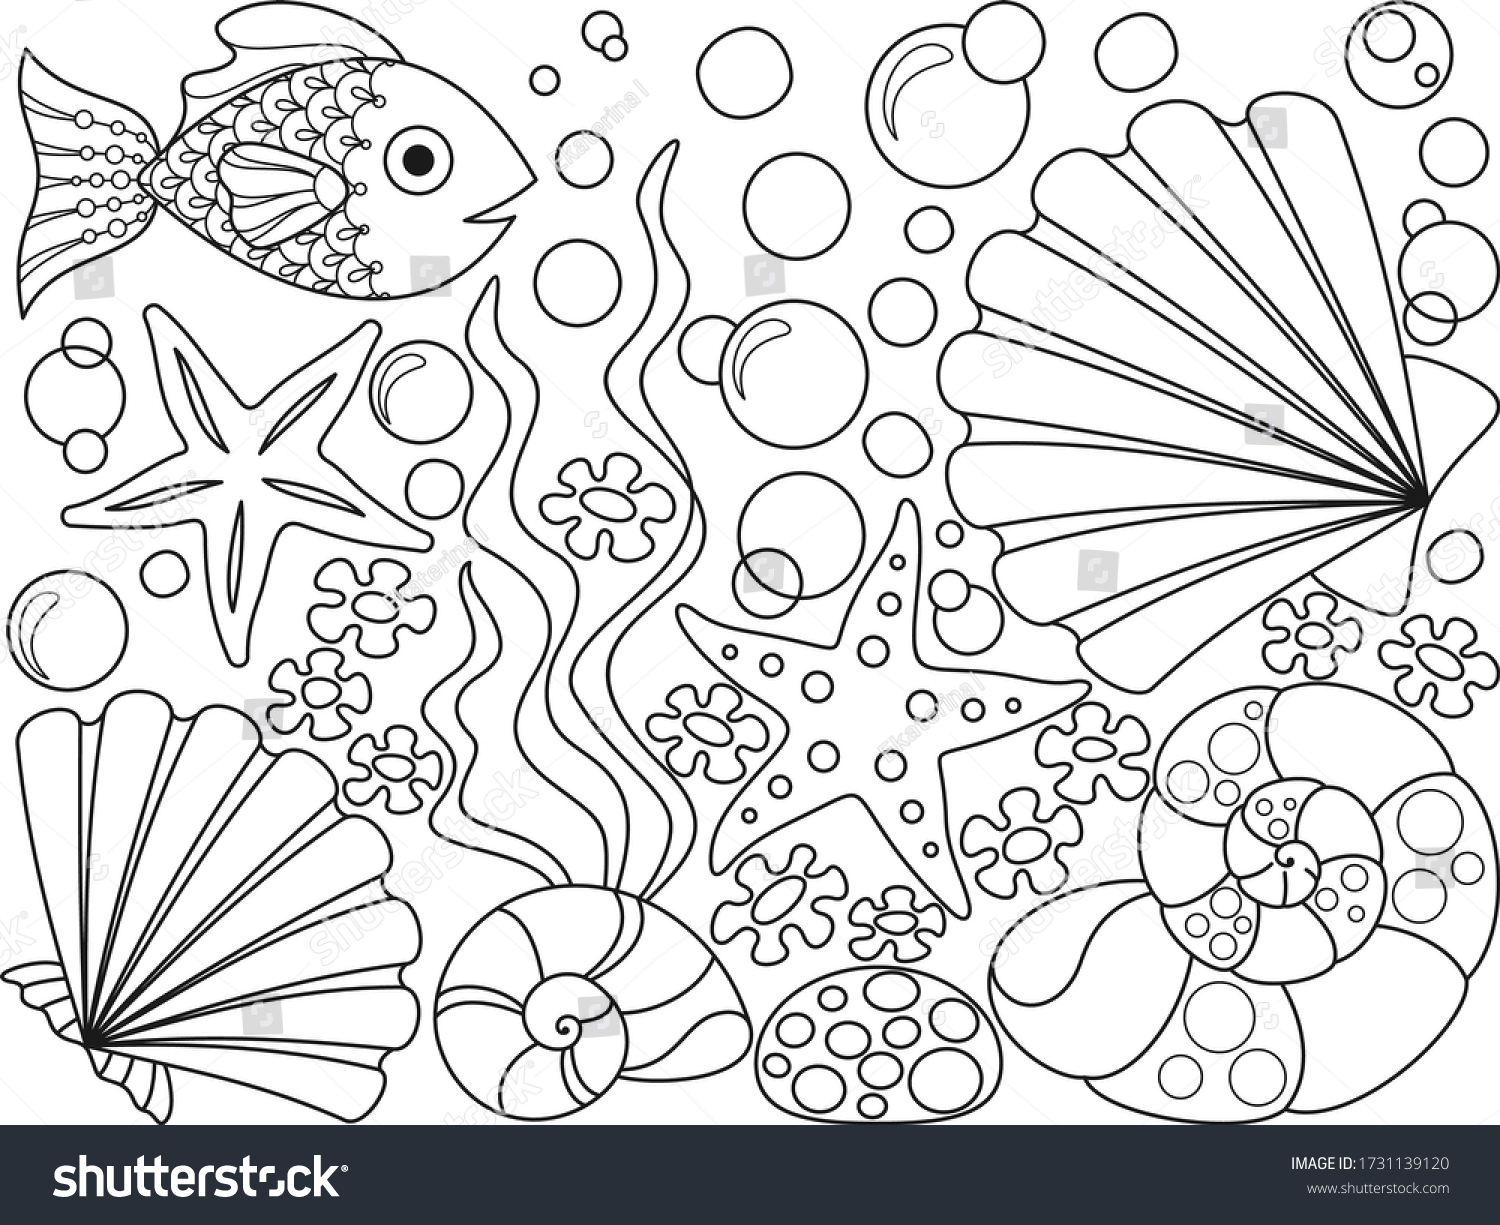 Coloring page seashells starfish seaweed bubbles stock vector royalty free